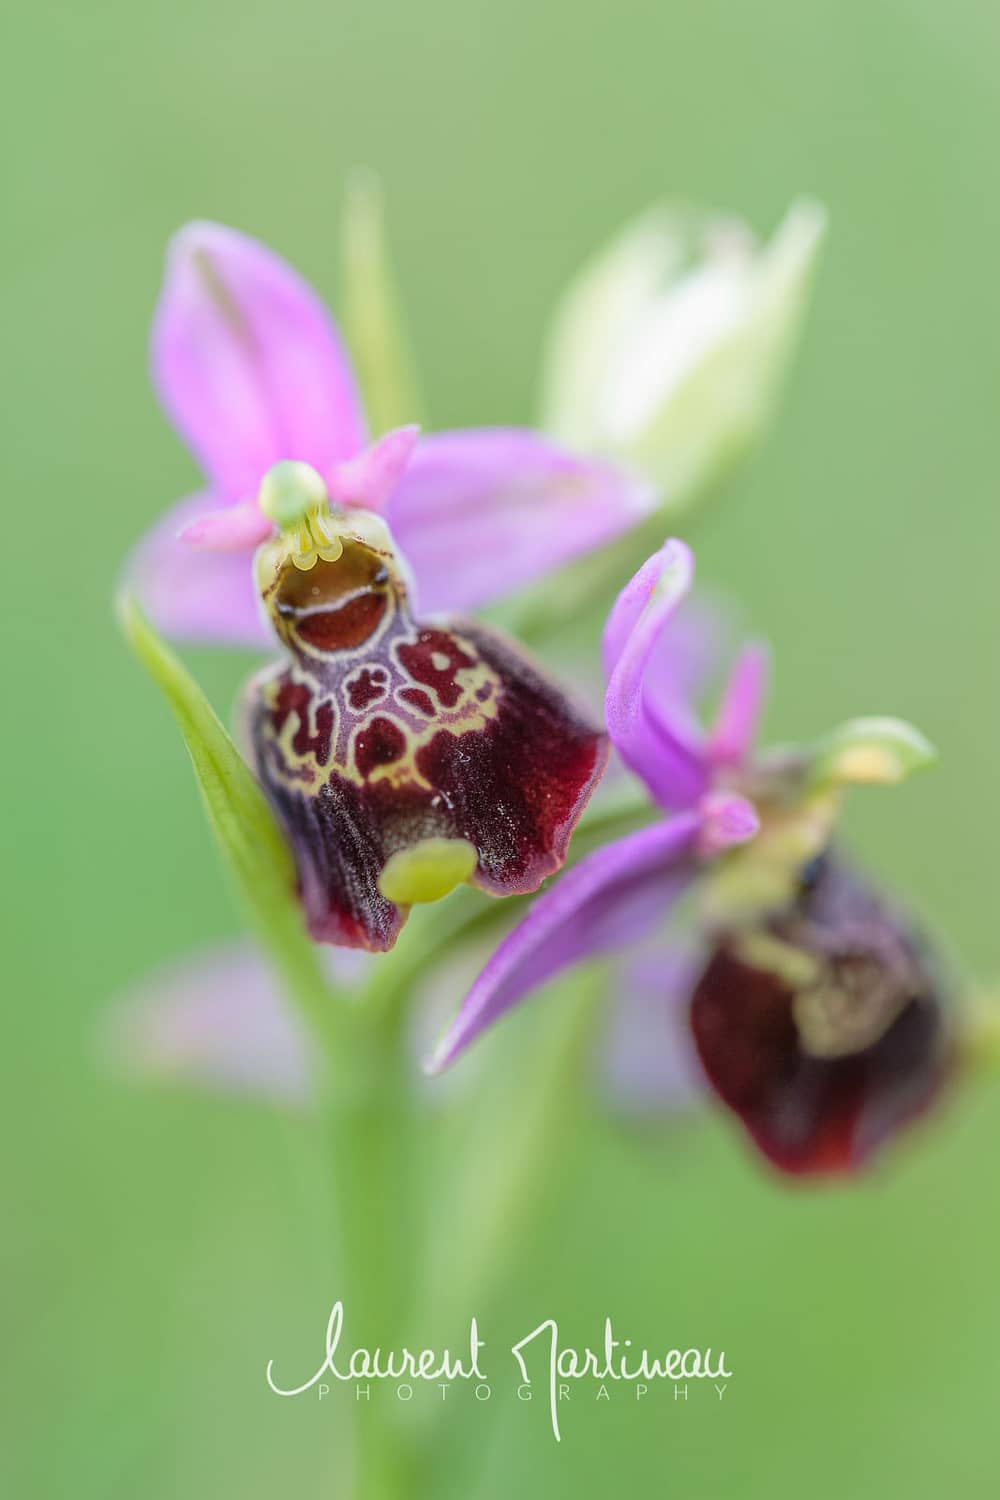 Ophrys bourdon (Gros plan)